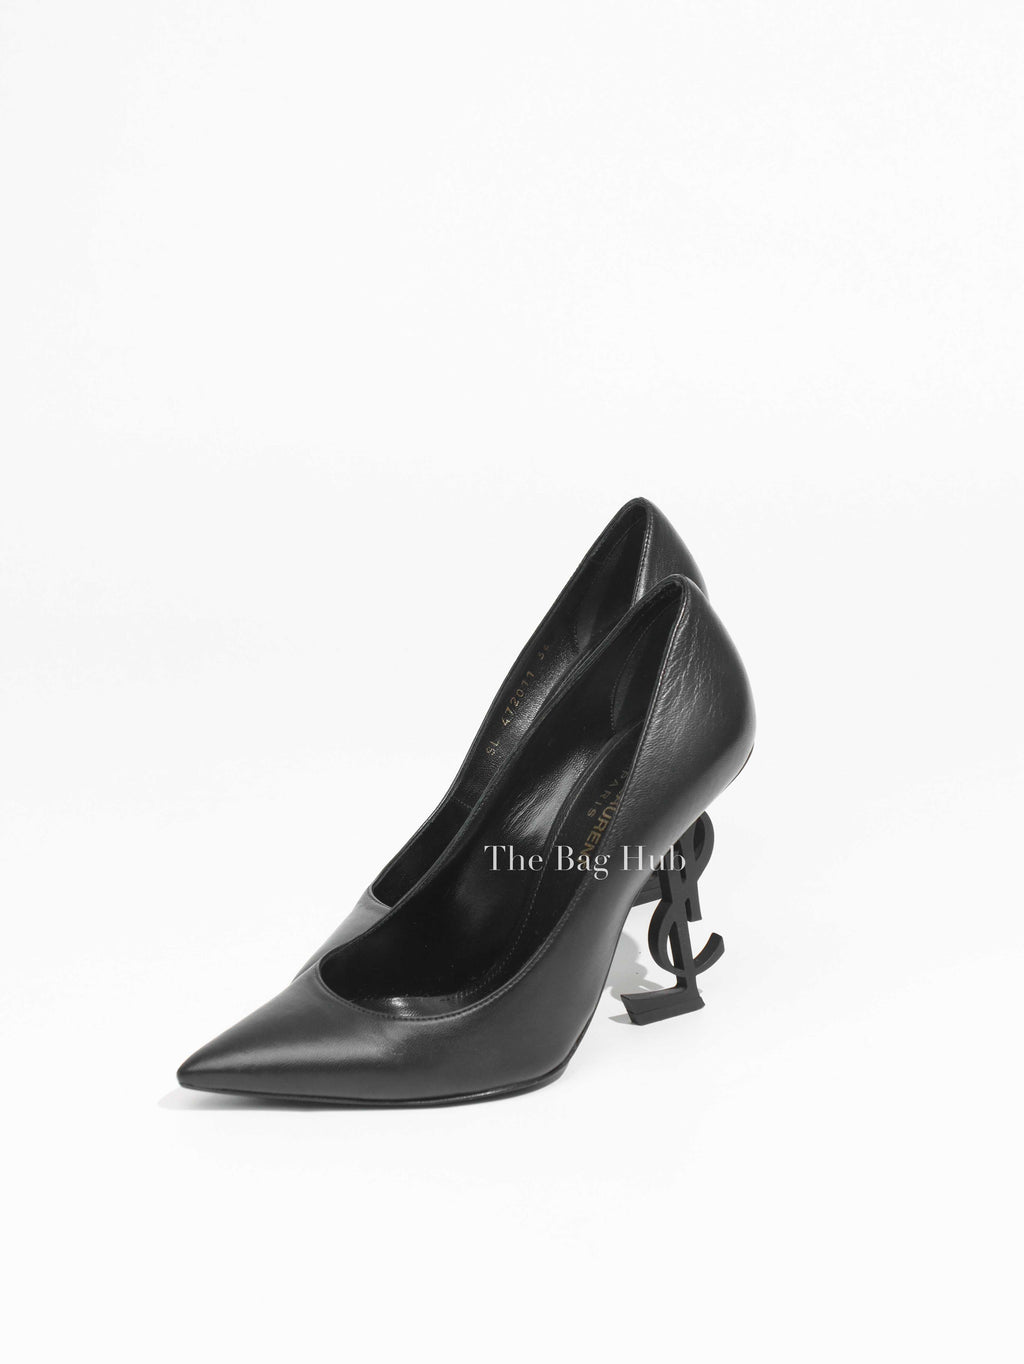 Saint Laurent Black Leather Opyum Pointed Toe Pumps Size 36-1